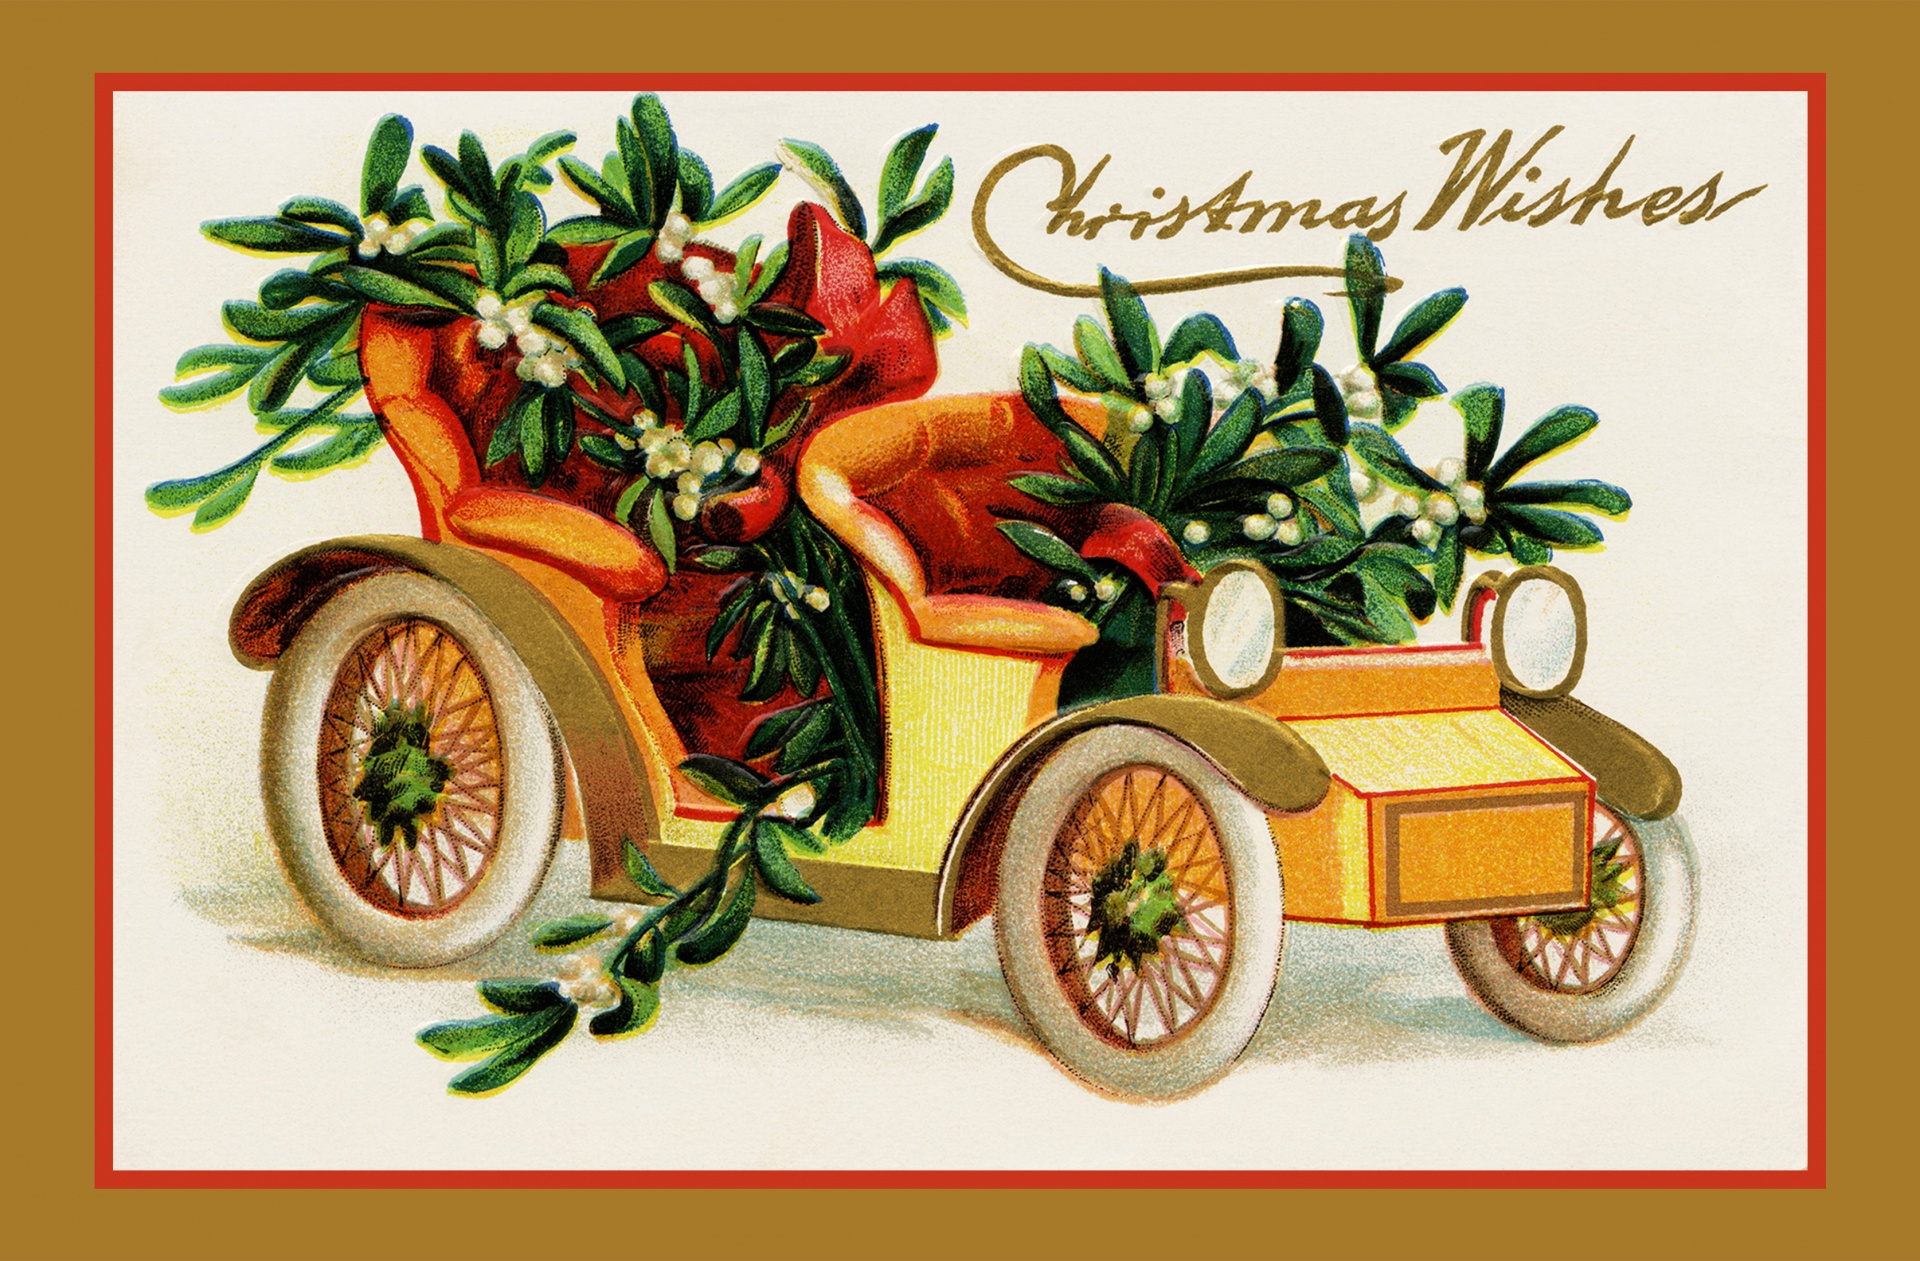 Vintage christmas card with vintage car filled with mistletoe